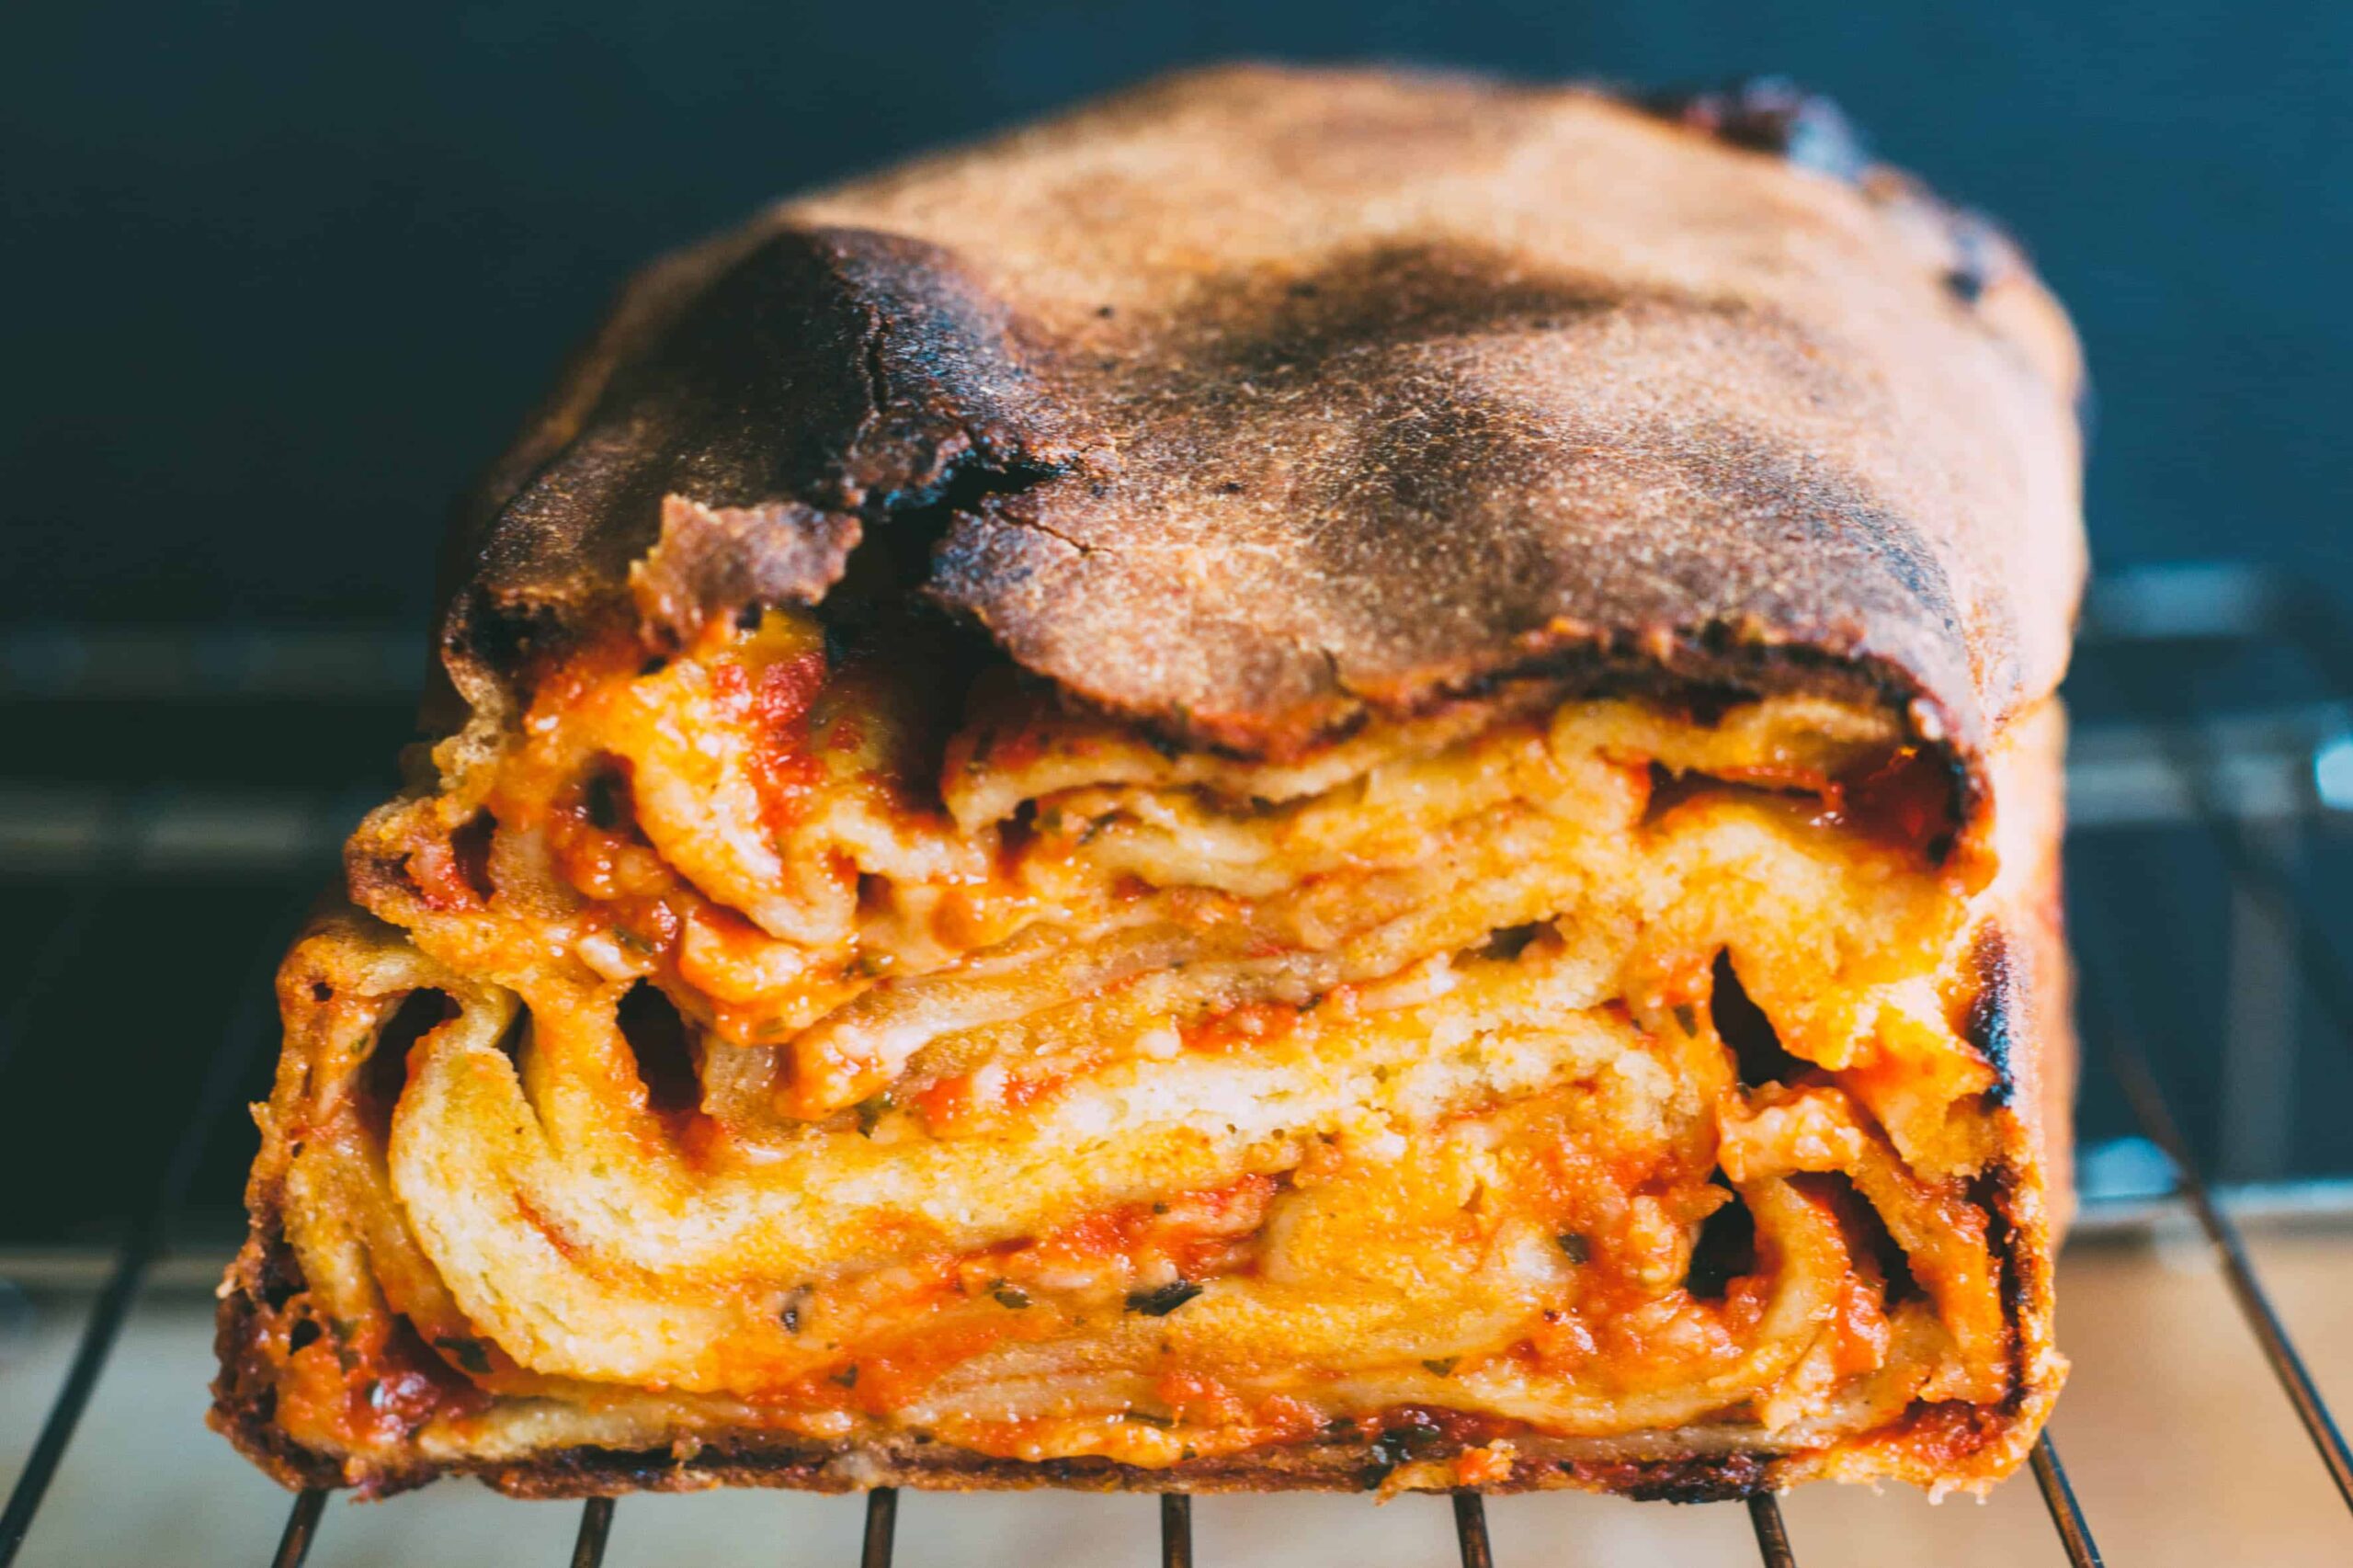 Sicilian Cheese Pizza — Let's Dish Recipes